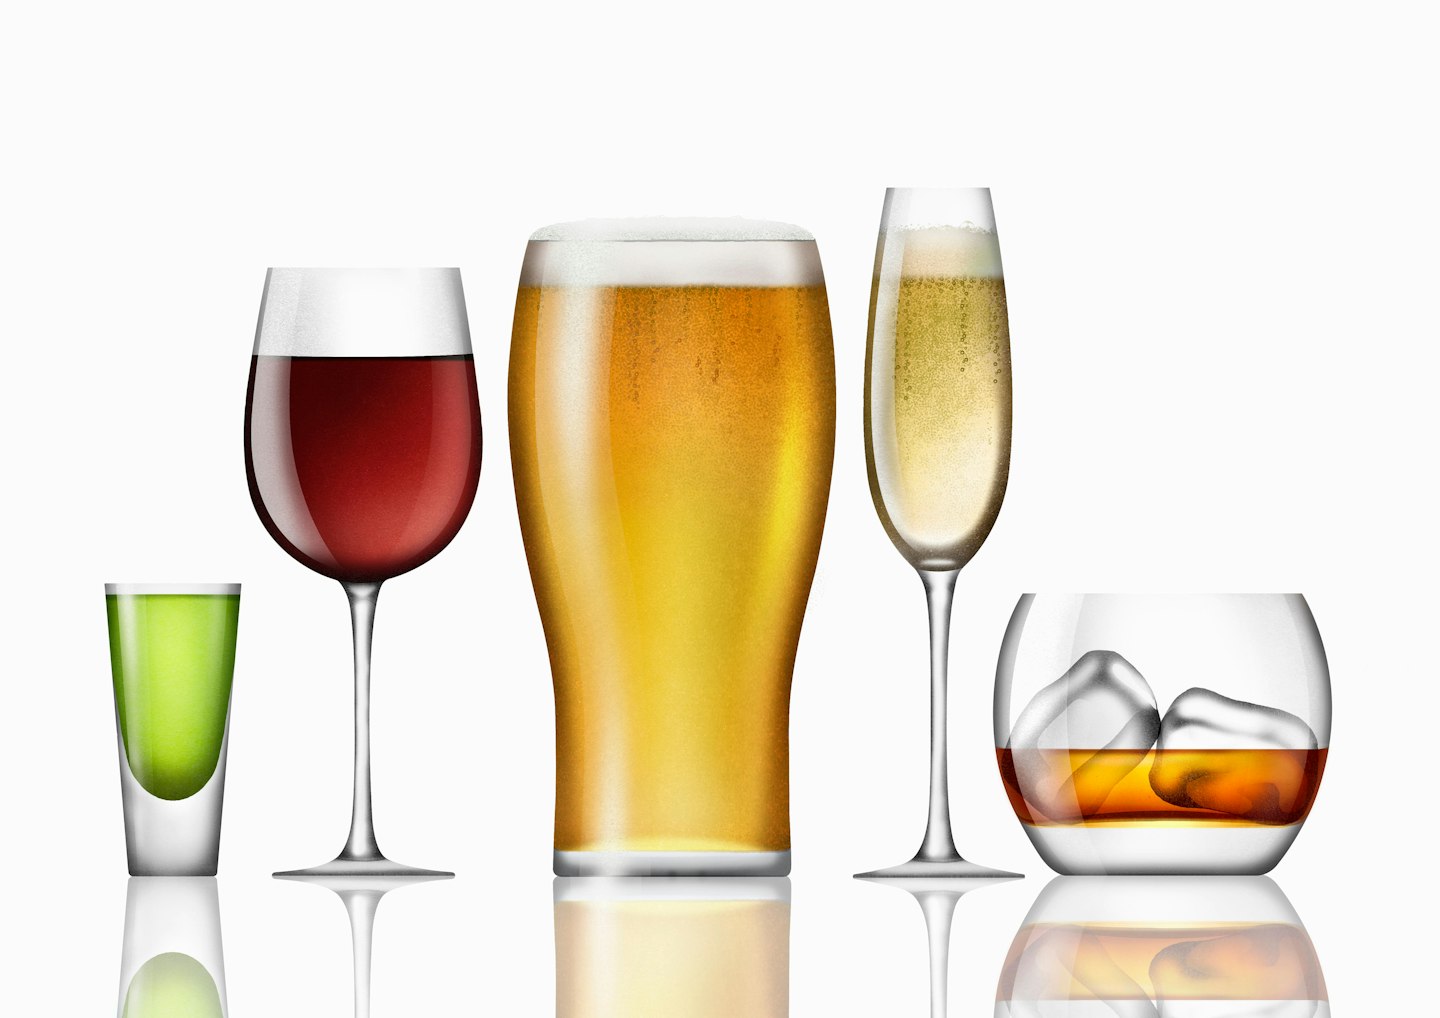  alcohol wine health benefits